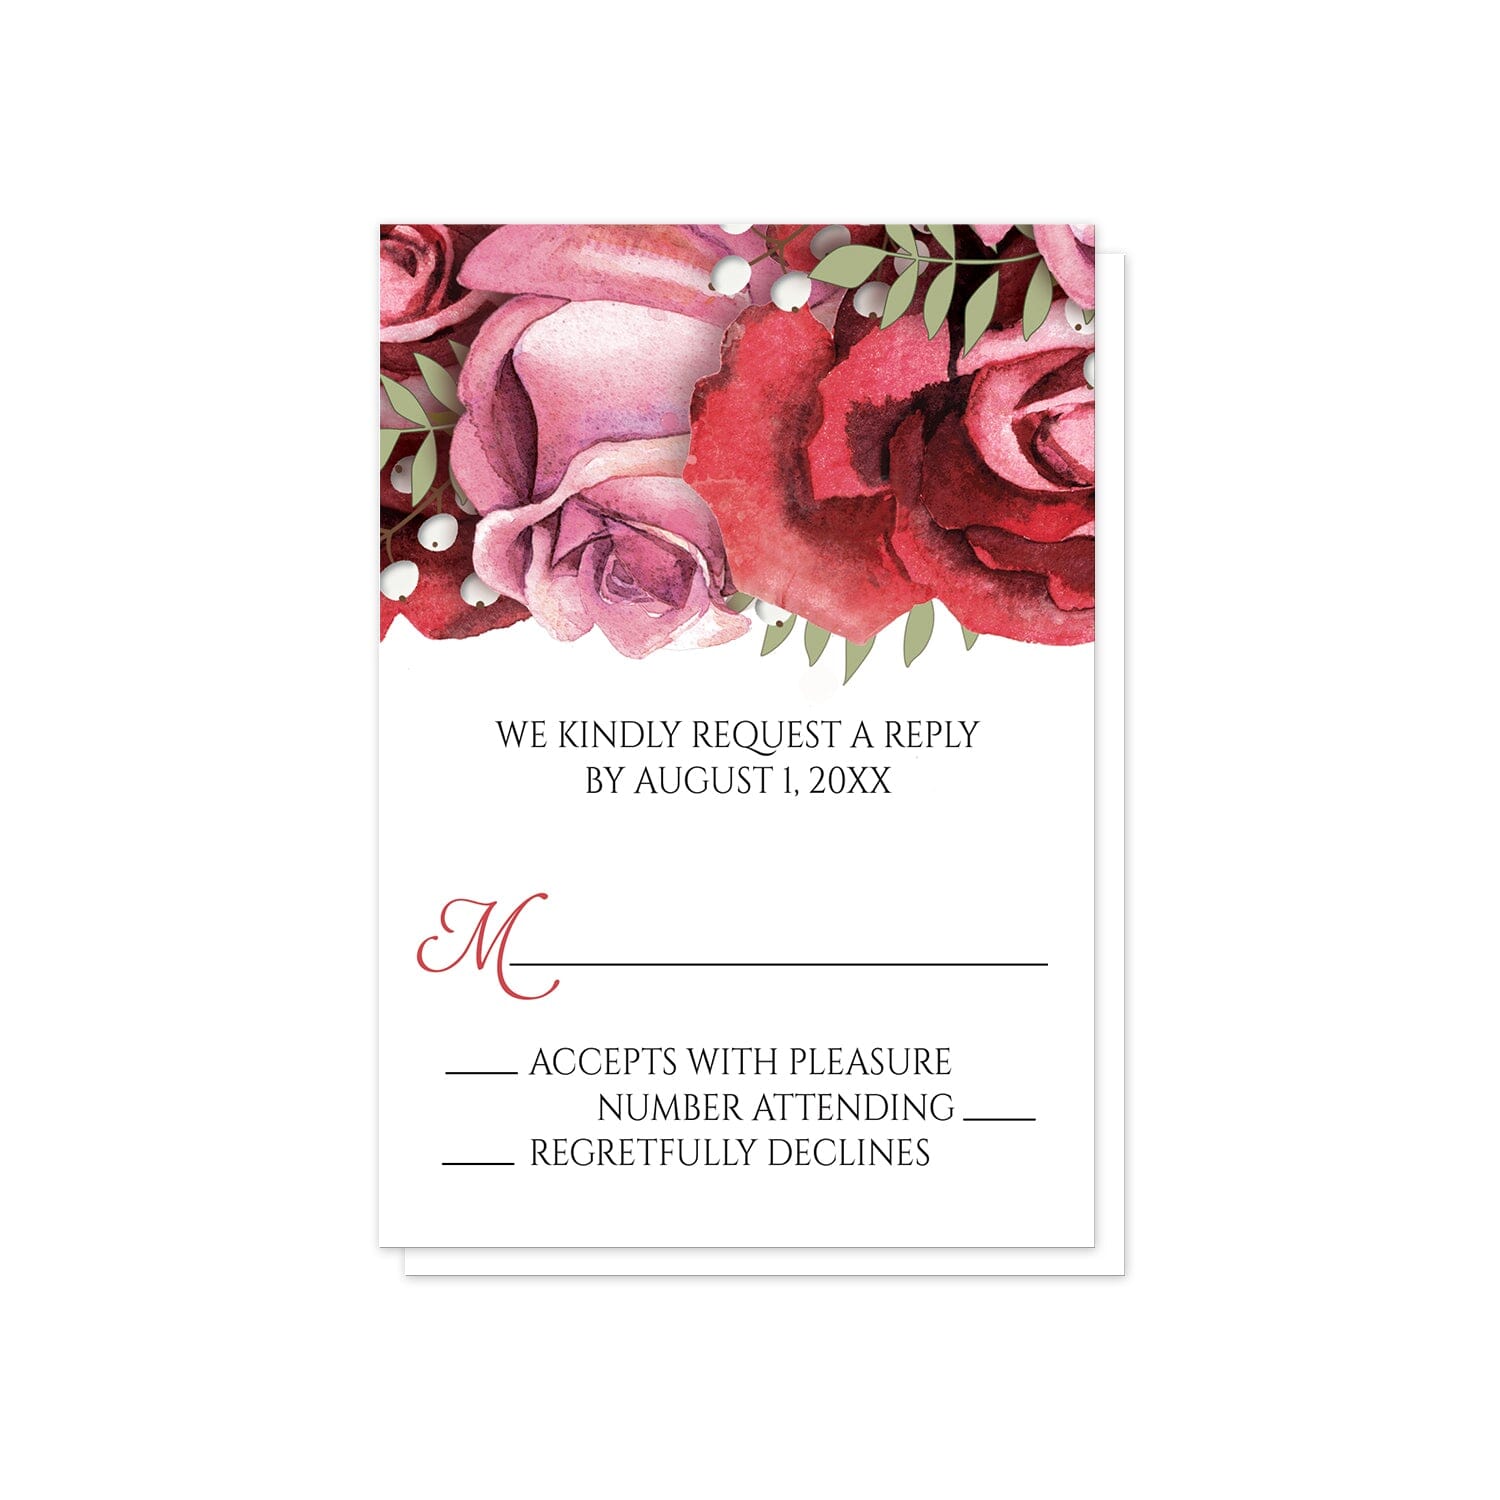 Burgundy Red Pink Rose RSVP Cards at Artistically Invited.